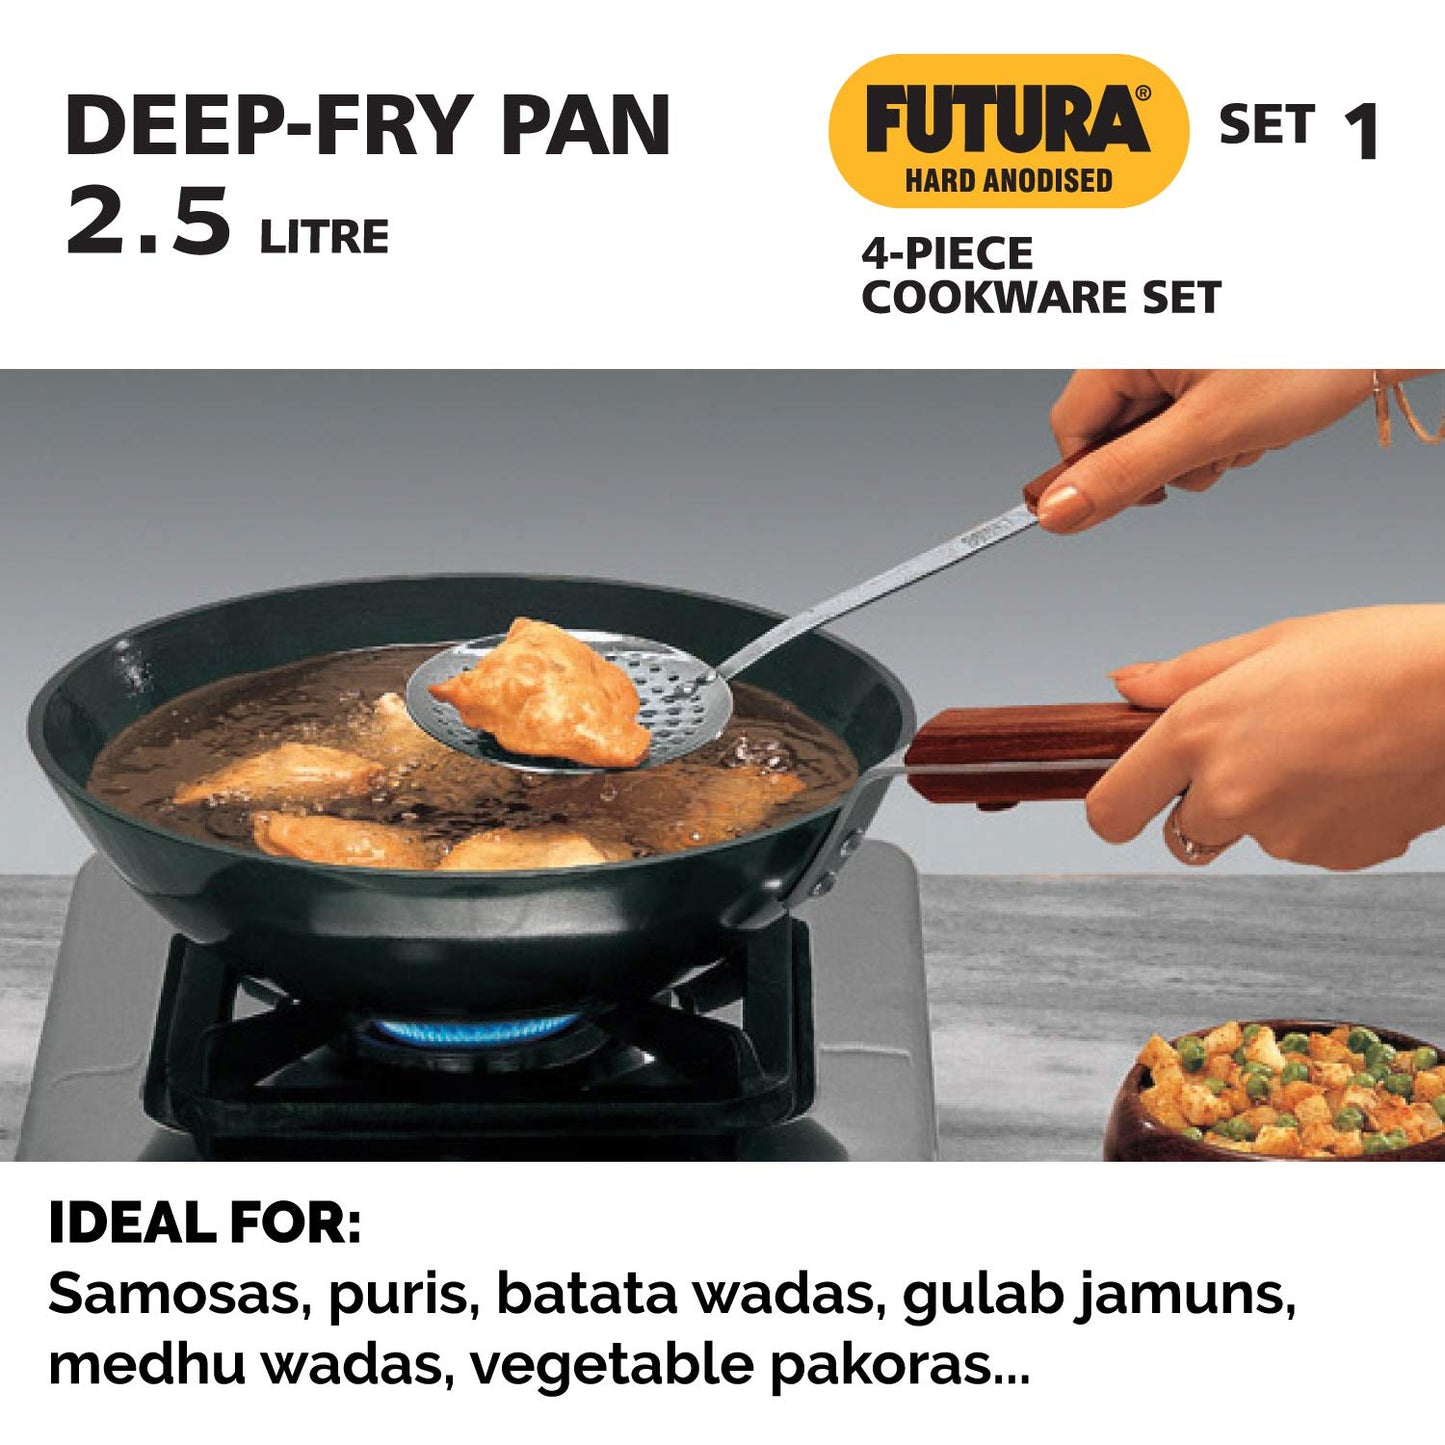 Hawkins Futura 4 Pieces Hard Anodised Cookware Set 1 - 26cm Tava, 22cm Frying Pan, 2.5 Litres Deep Fry Pan and 3 Litres Cook-n-Serve Bowl and One Hard Anodised Lid -ASET1